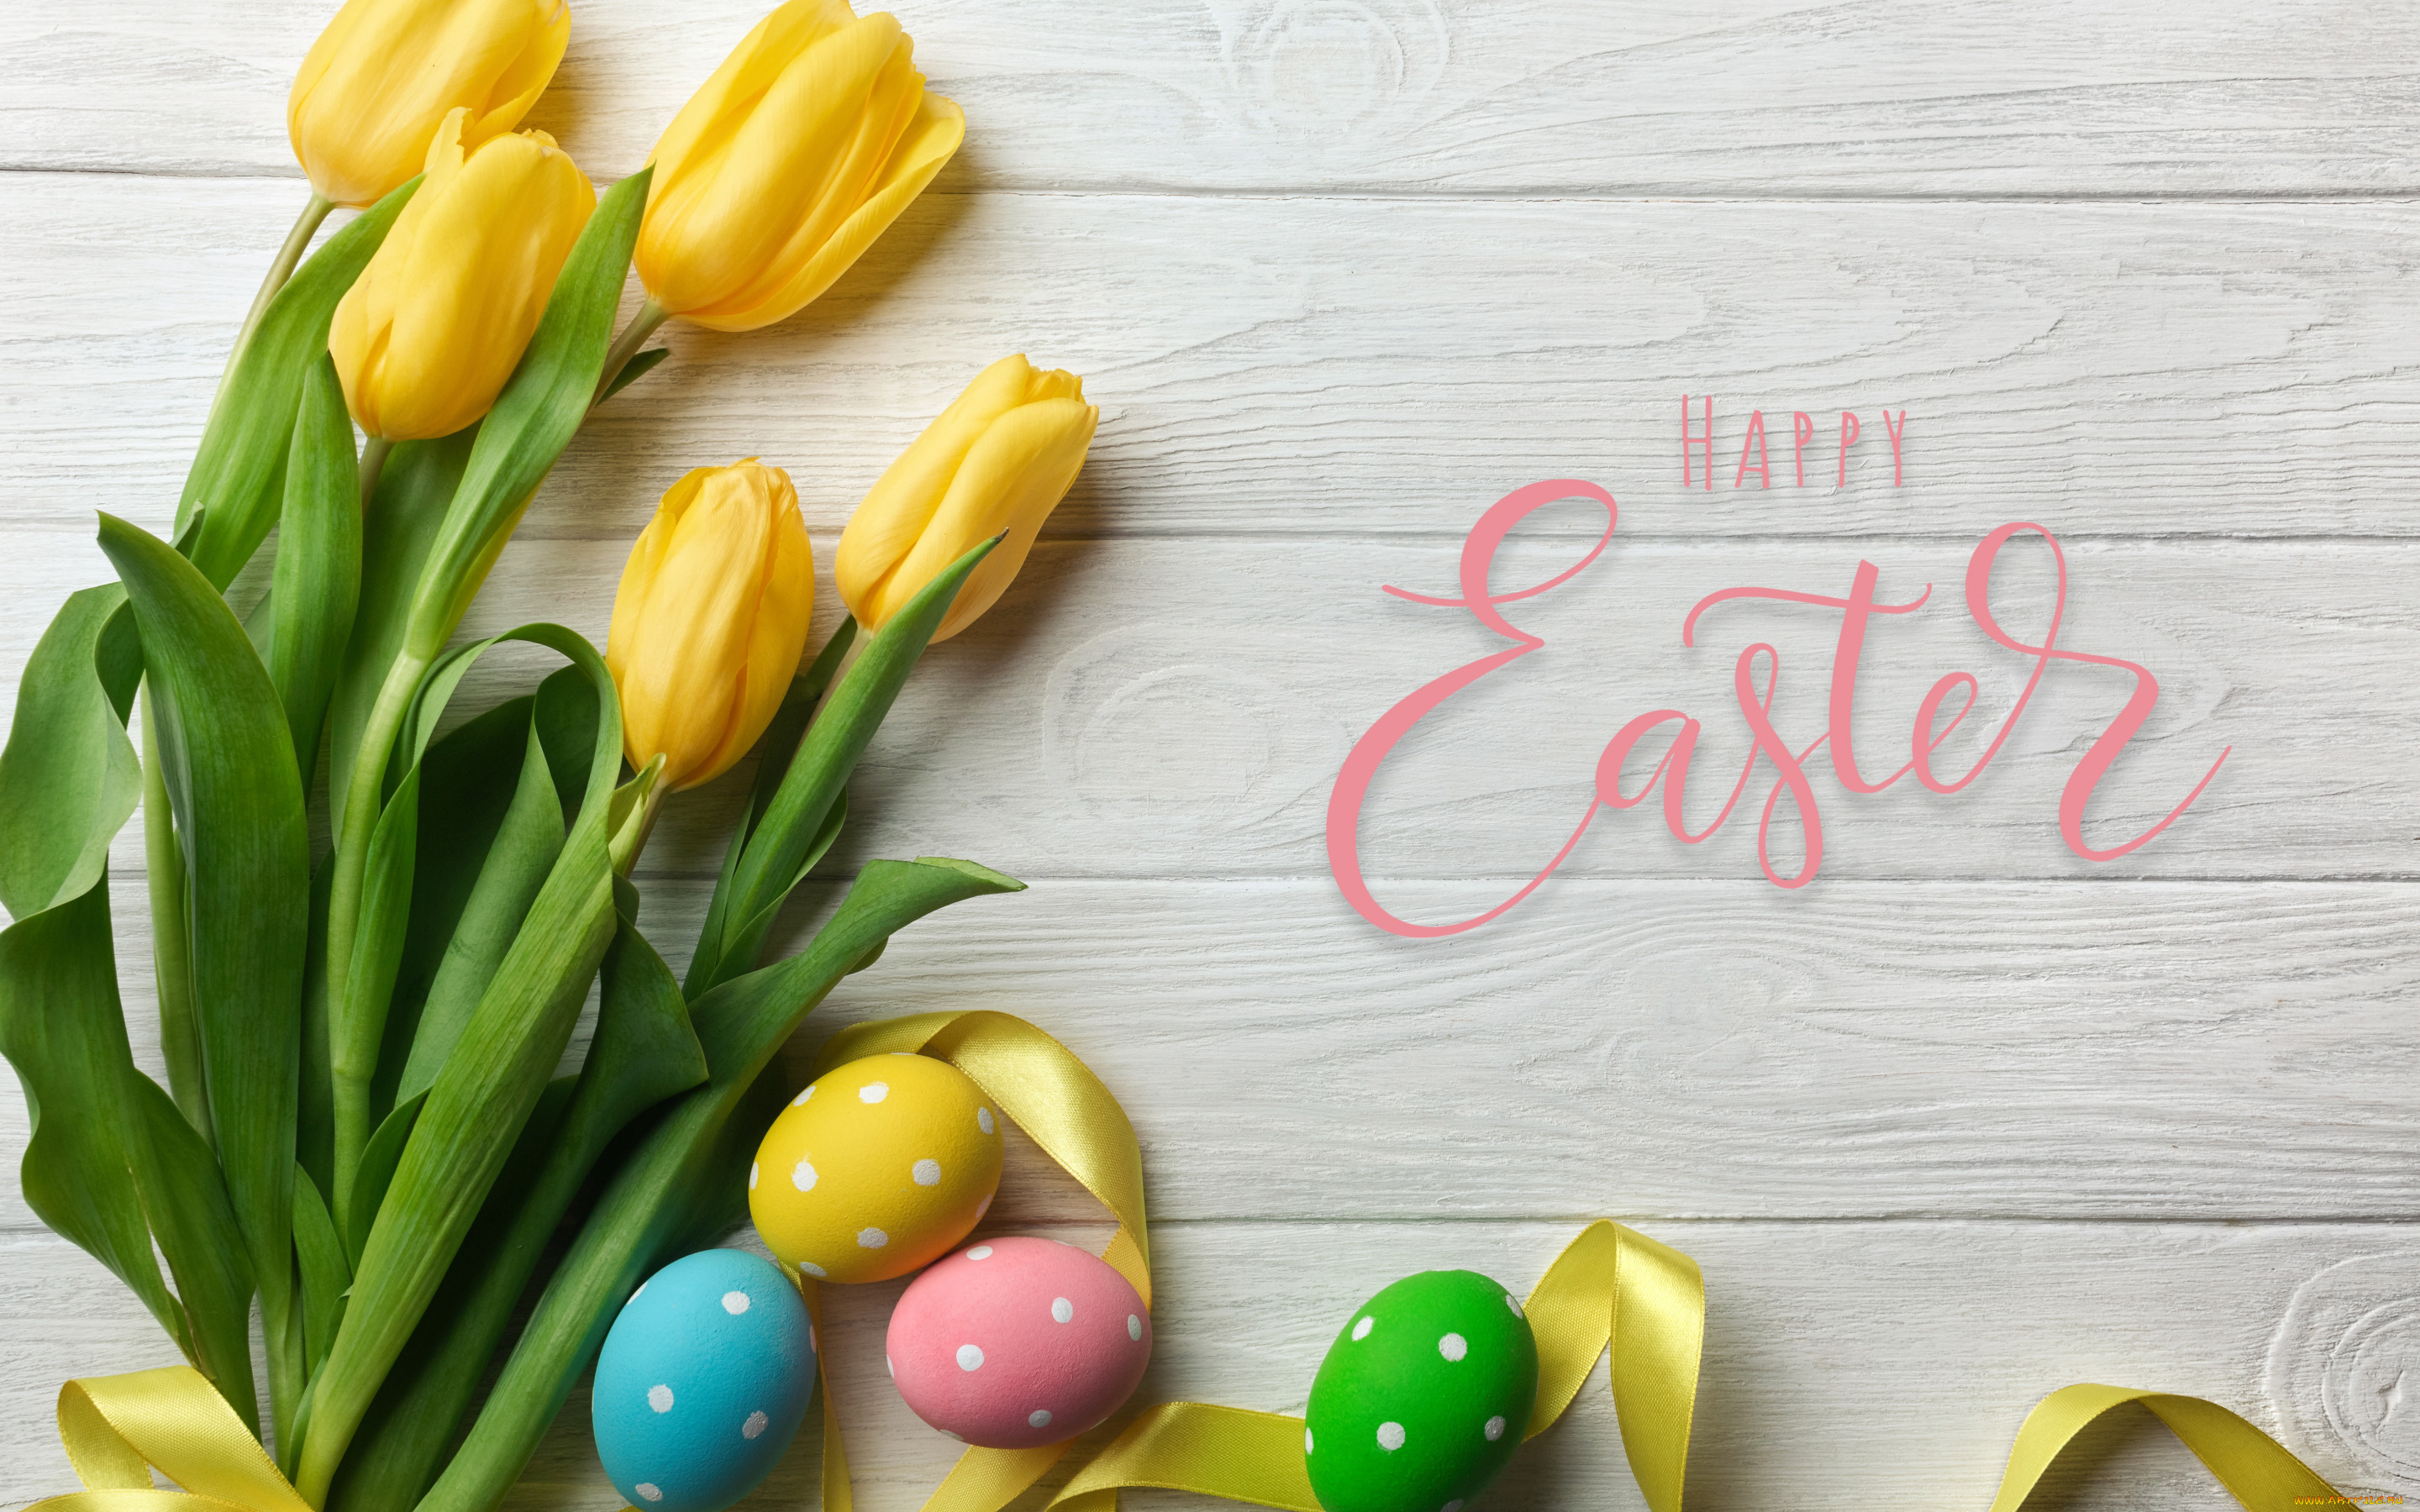 праздничные, пасха, яйца, букет, желтые, colorful, тюльпаны, happy, yellow, wood, flowers, tulips, easter, eggs, decoration